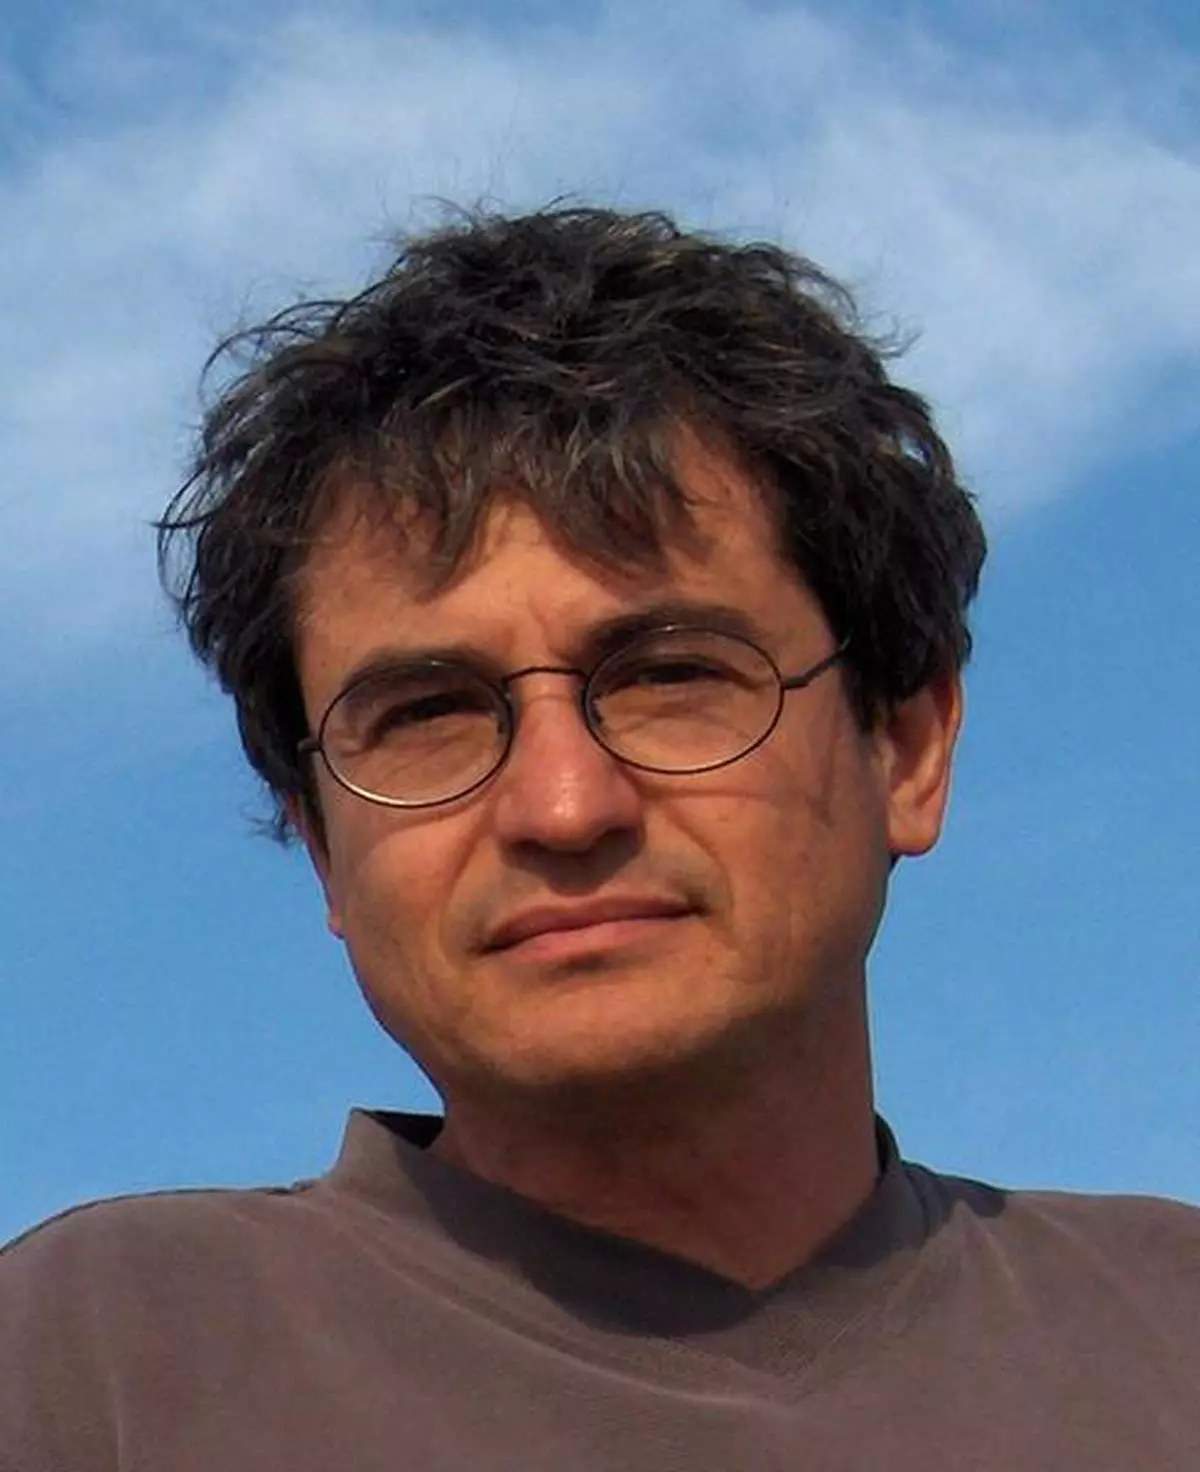 Carlo Rovelli: intellectual free spirit, quantum physicist